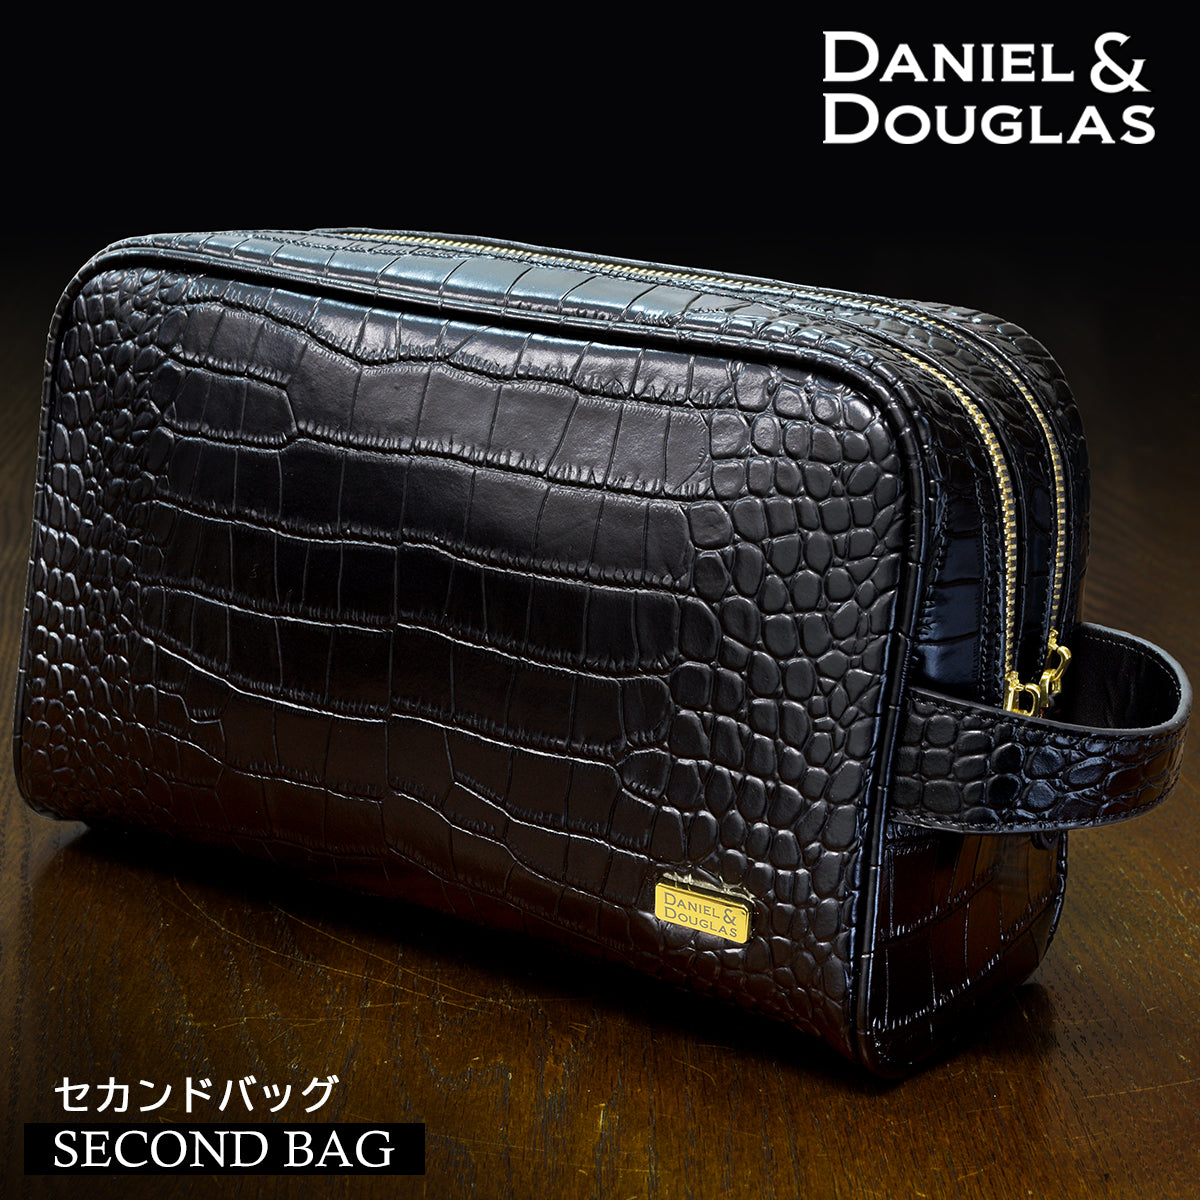 DANIEL & DOUGLAS second bag DDLB01-BKGD